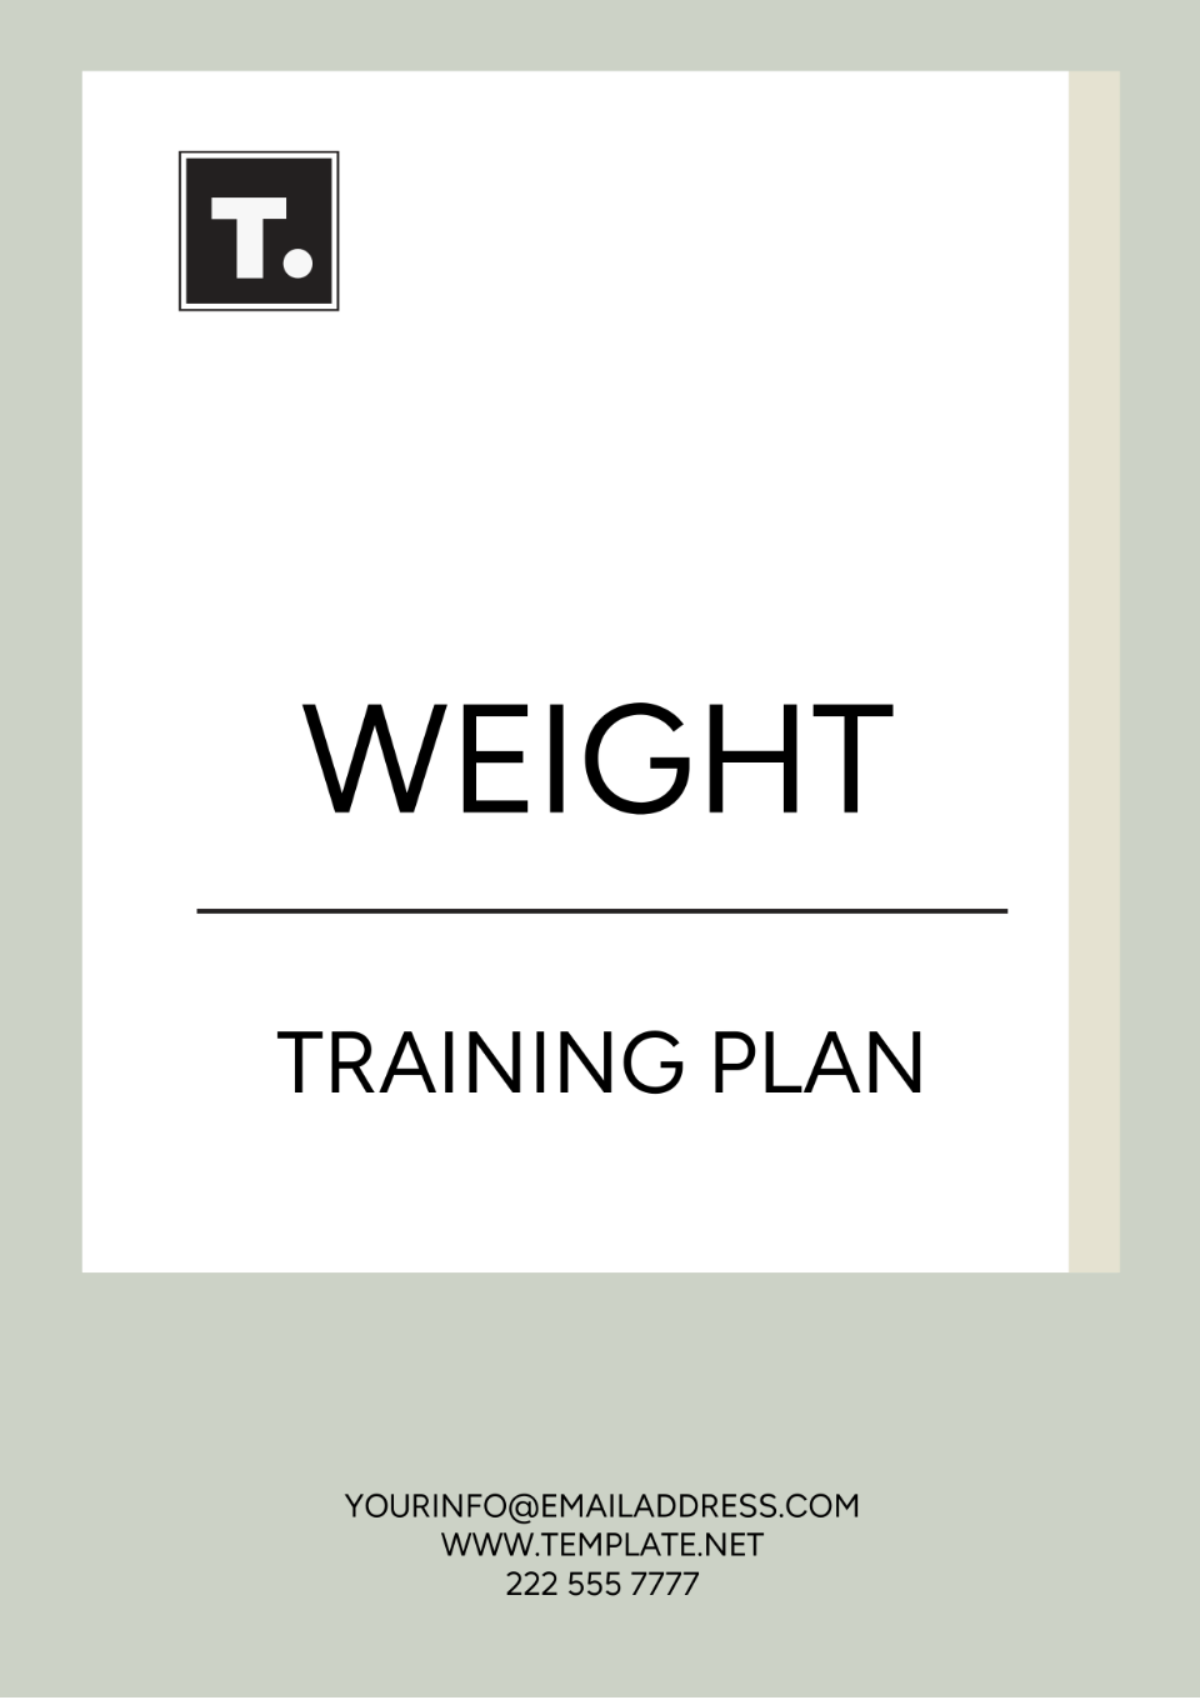 Weight Training Plan Template